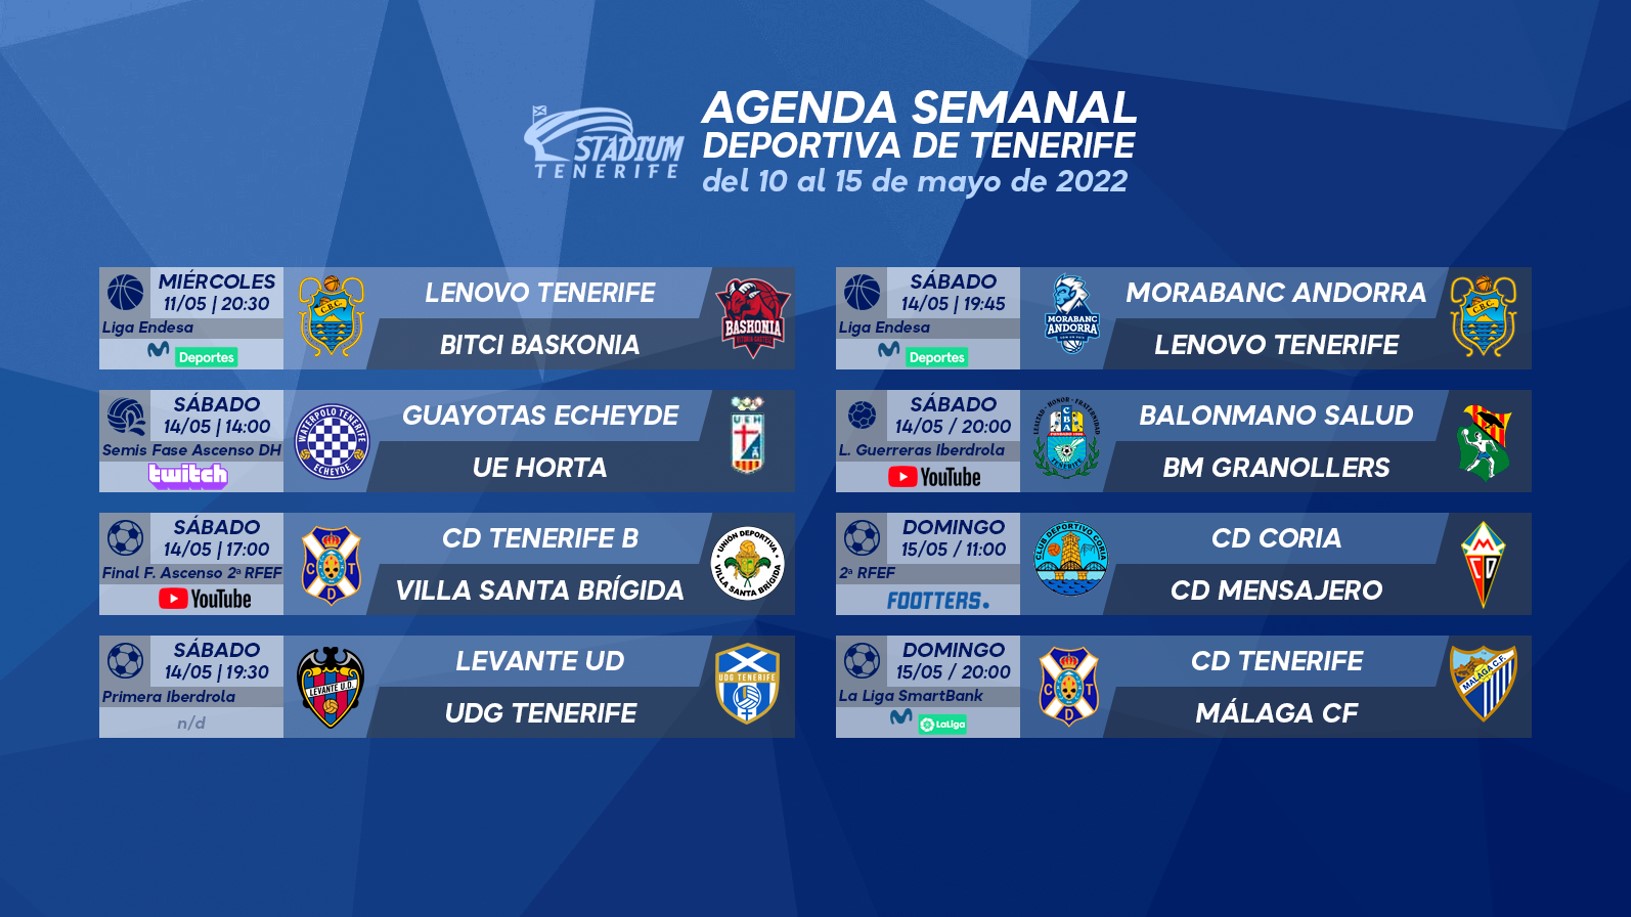 Agenda Semanal Deportiva de Tenerife (10 al 15 de mayo)